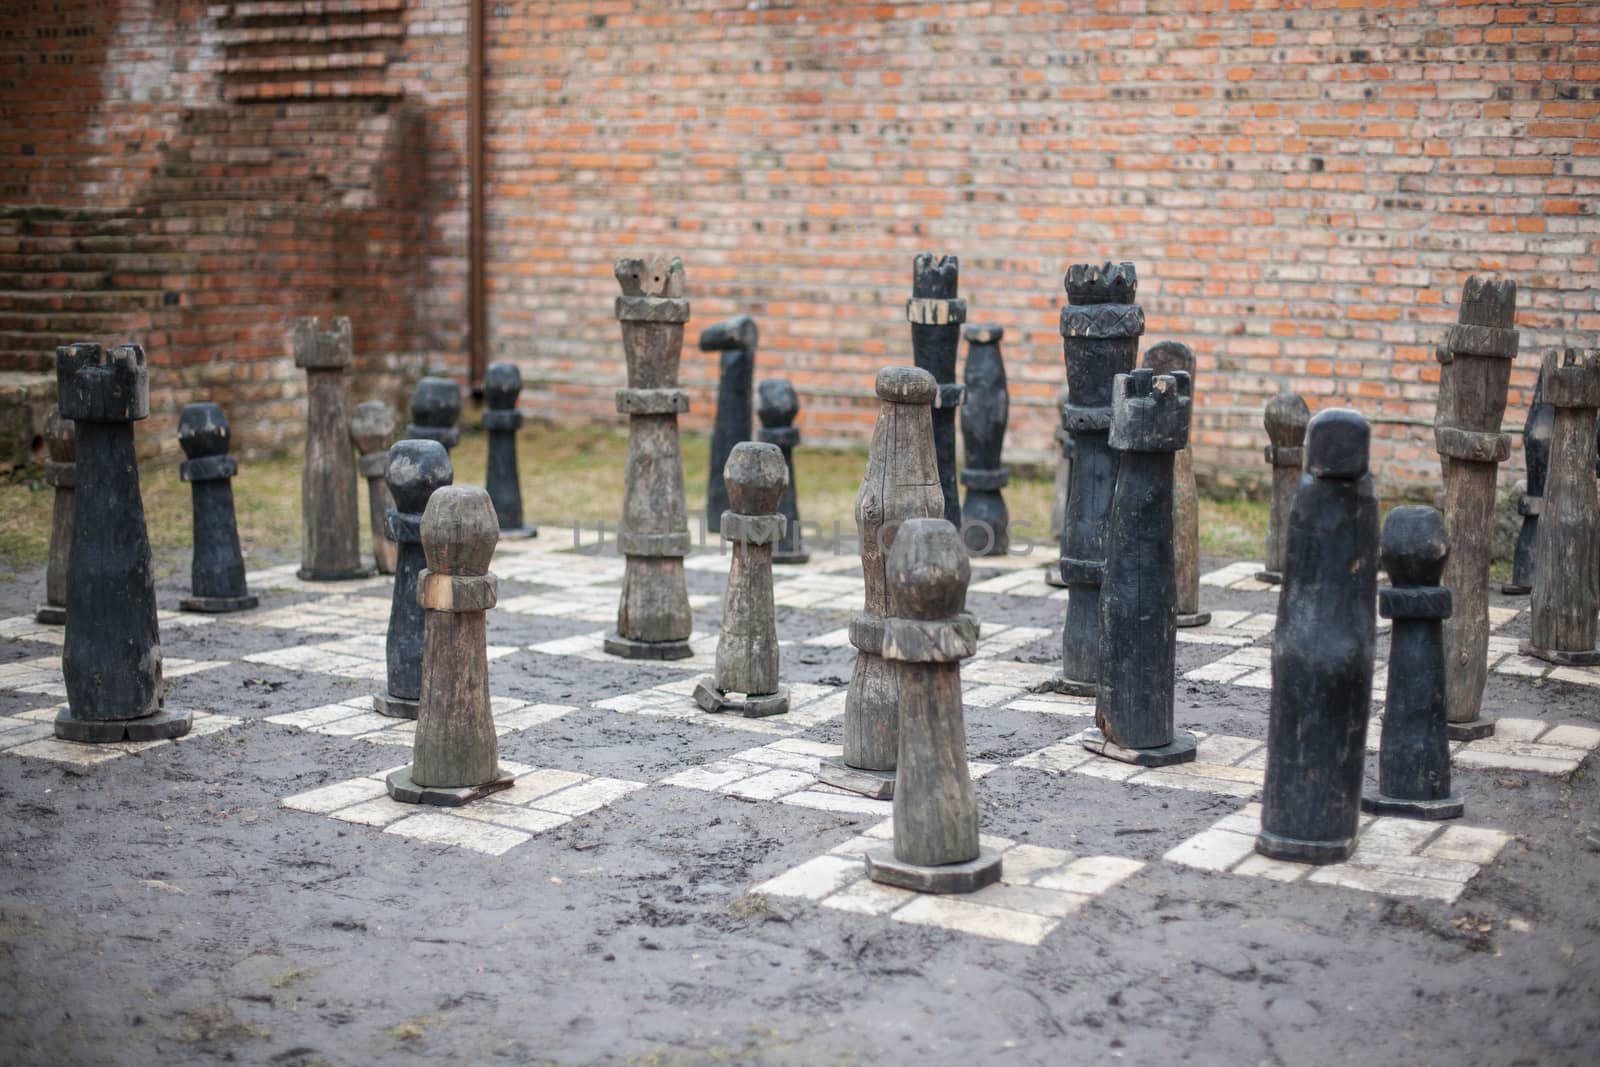 Encient big chess shapes at High old Lubart Castle in Lutsk Ukraine